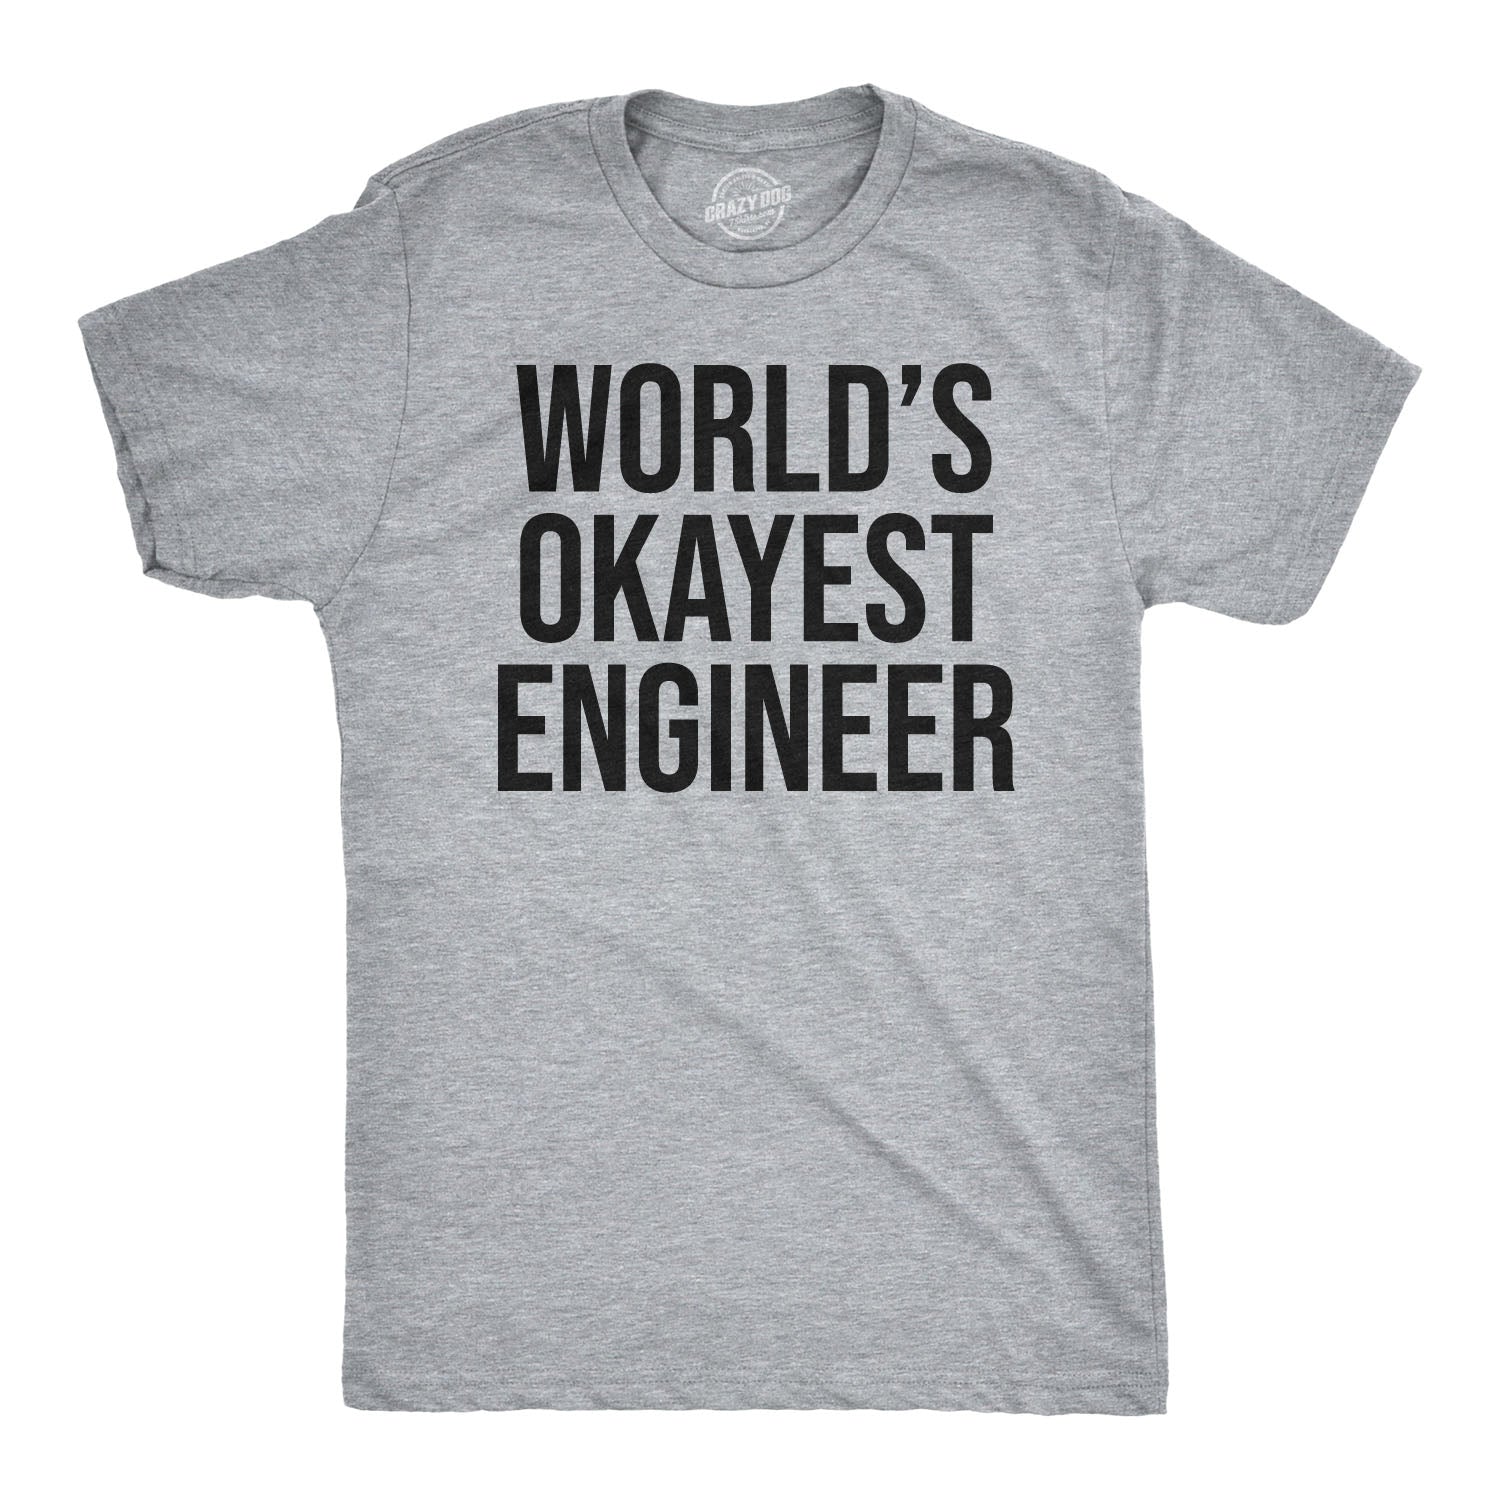 Funny Light Heather Grey World's Okayest Engineer Mens T Shirt Nerdy Okayest Sarcastic Tee